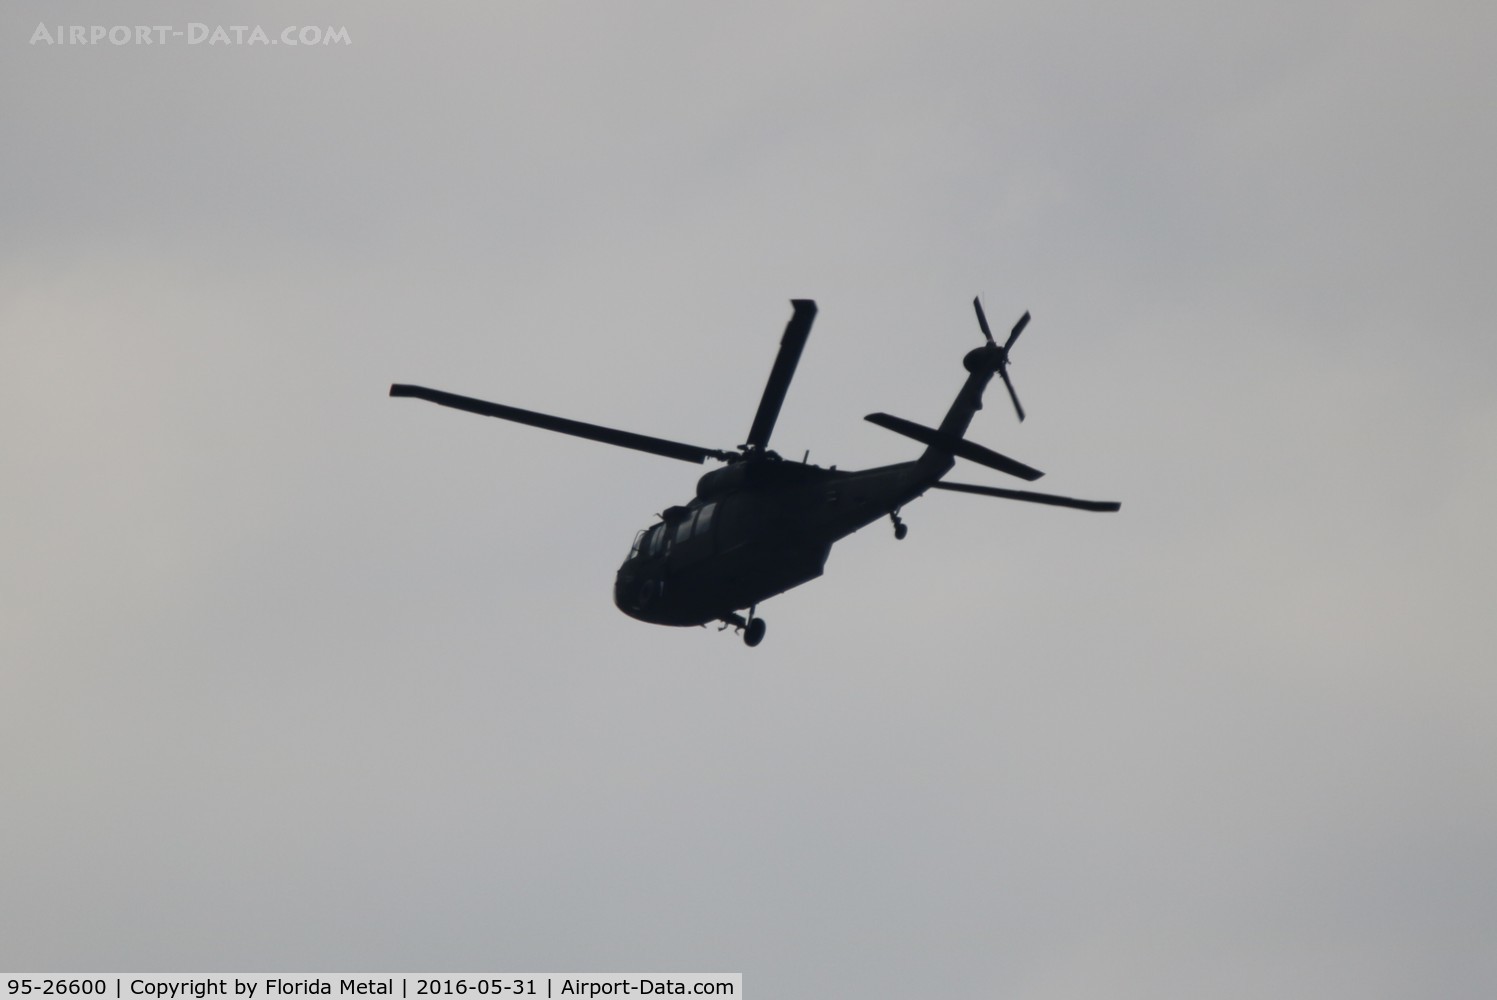 95-26600, 1995 Sikorsky UH-60L Black Hawk C/N 70-2117, UH-60L overflying Atlanta